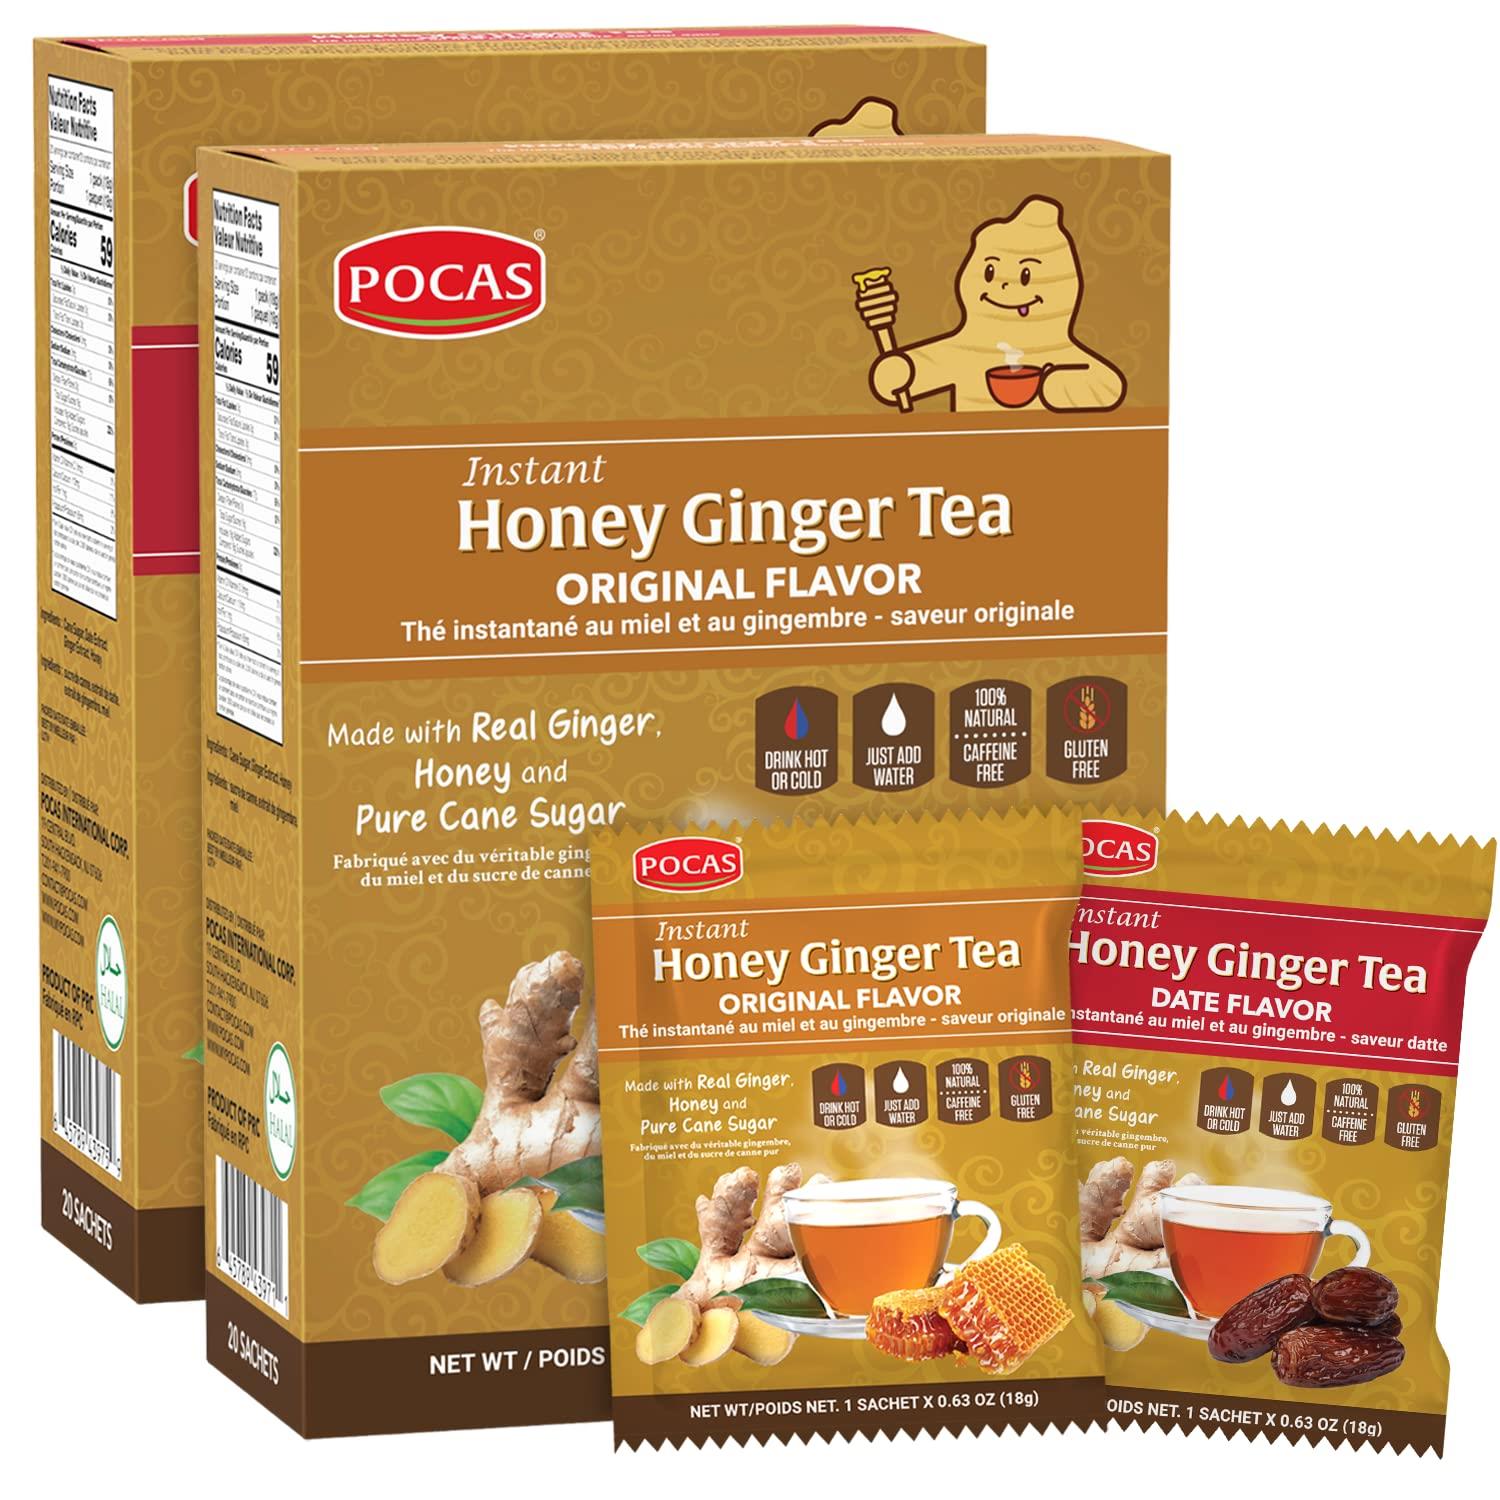 Pocas Honey Ginger Tea Variety Set - Instant Tea Powder Packets, Ginger Honey Crystals Tea, Original & Date Flavors, Non-GMO/Gluten Free/Caffeine Free Tea, 20 Count (Pack of 2)